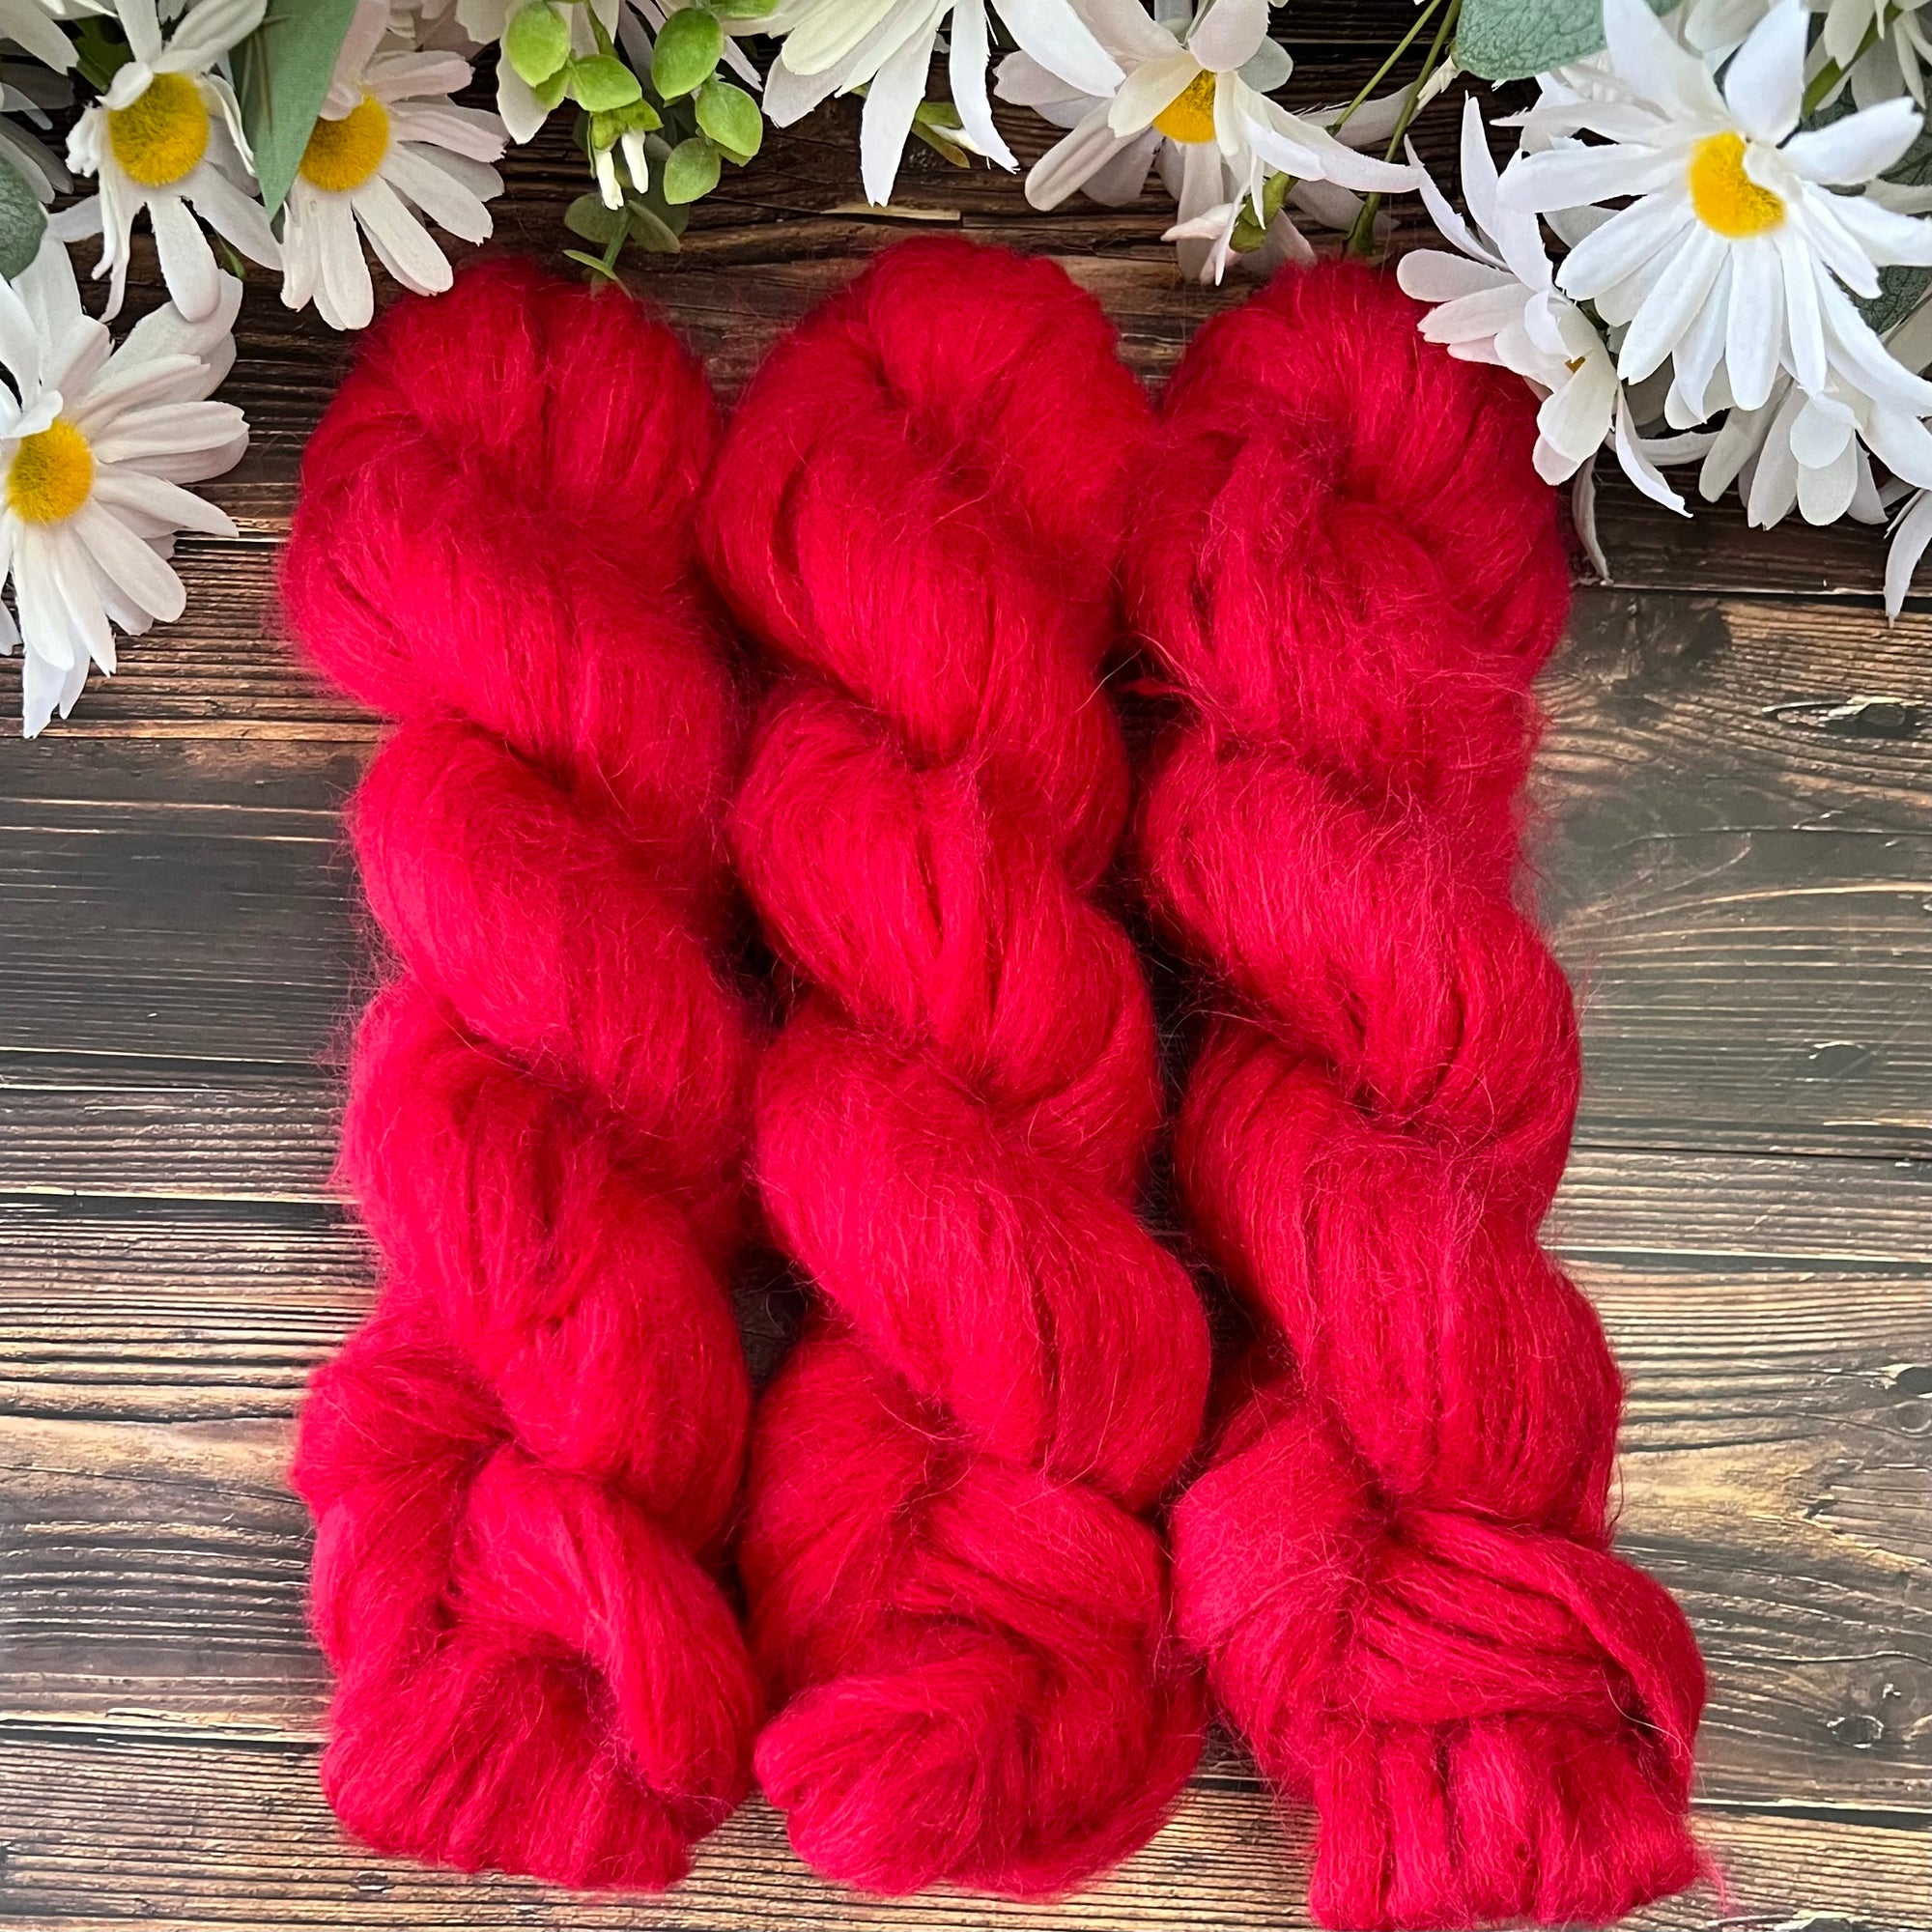 "Hot Lips" Suri Alpaca Hand-dyed Yarn